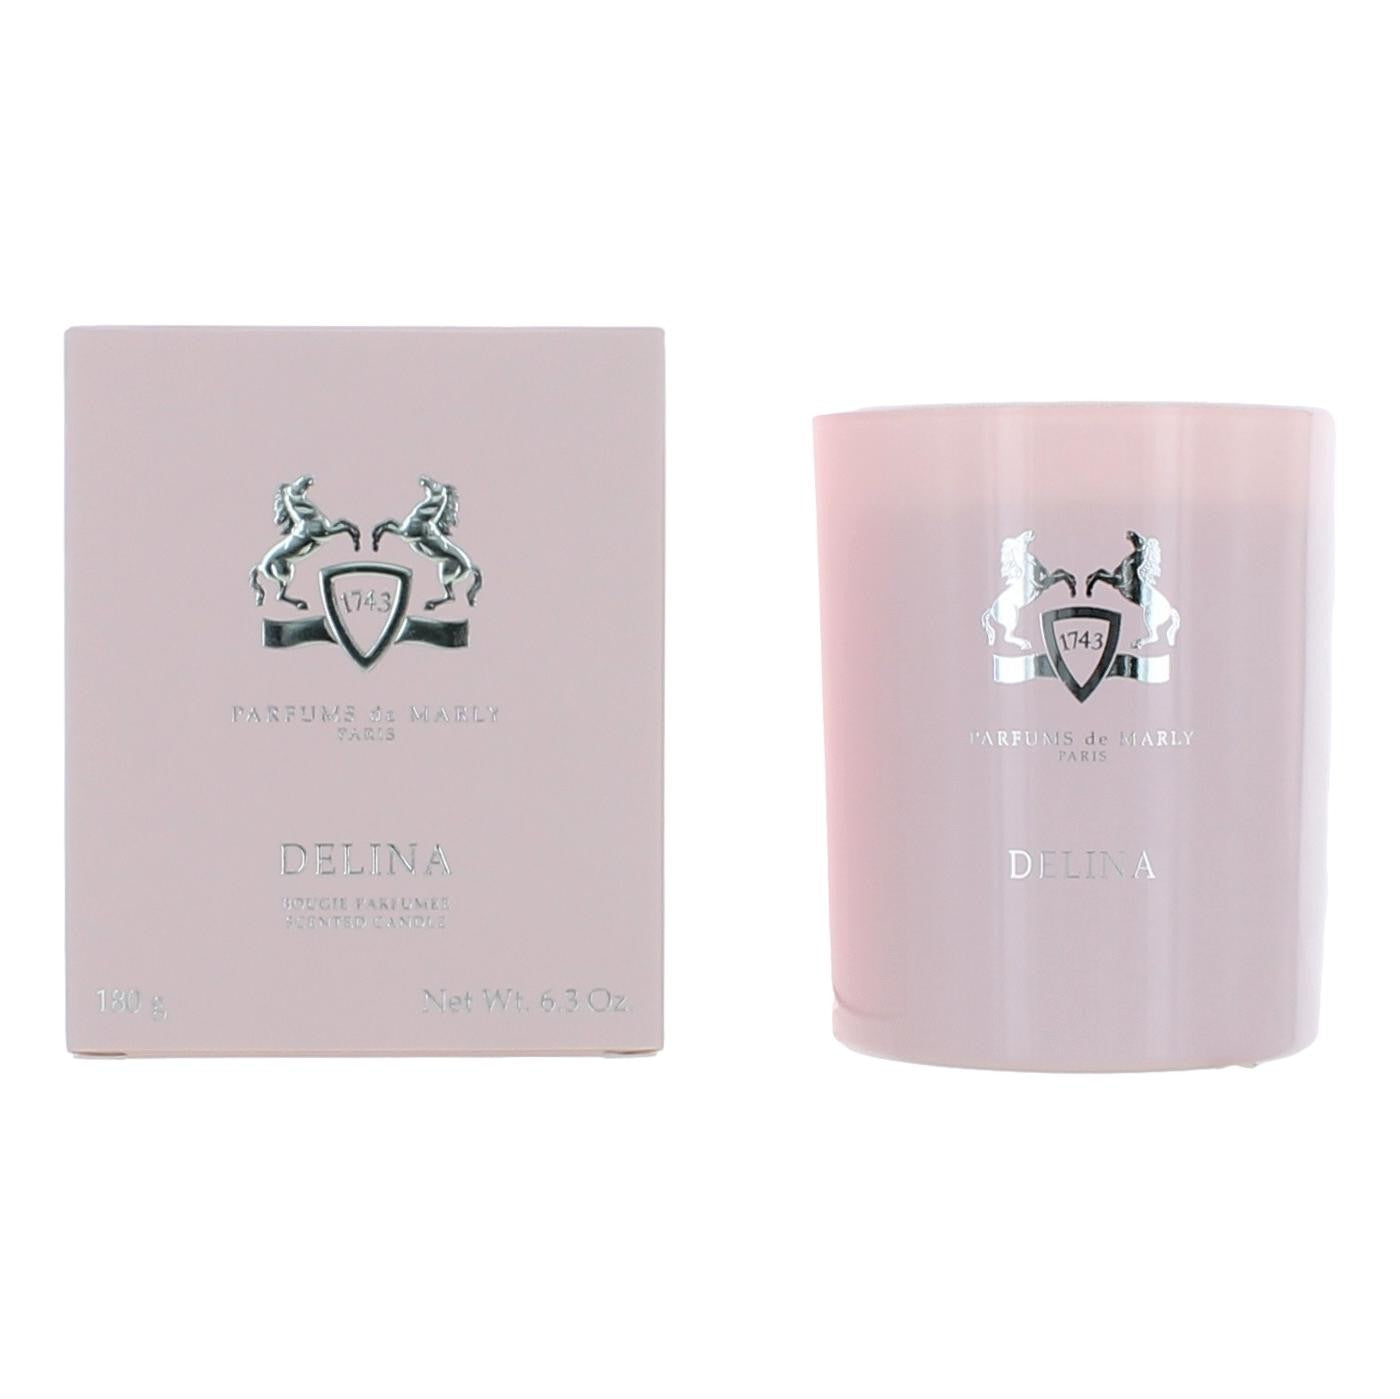 Parfums de Marly Delina by Parfums de Marly, 6.3 oz Candle